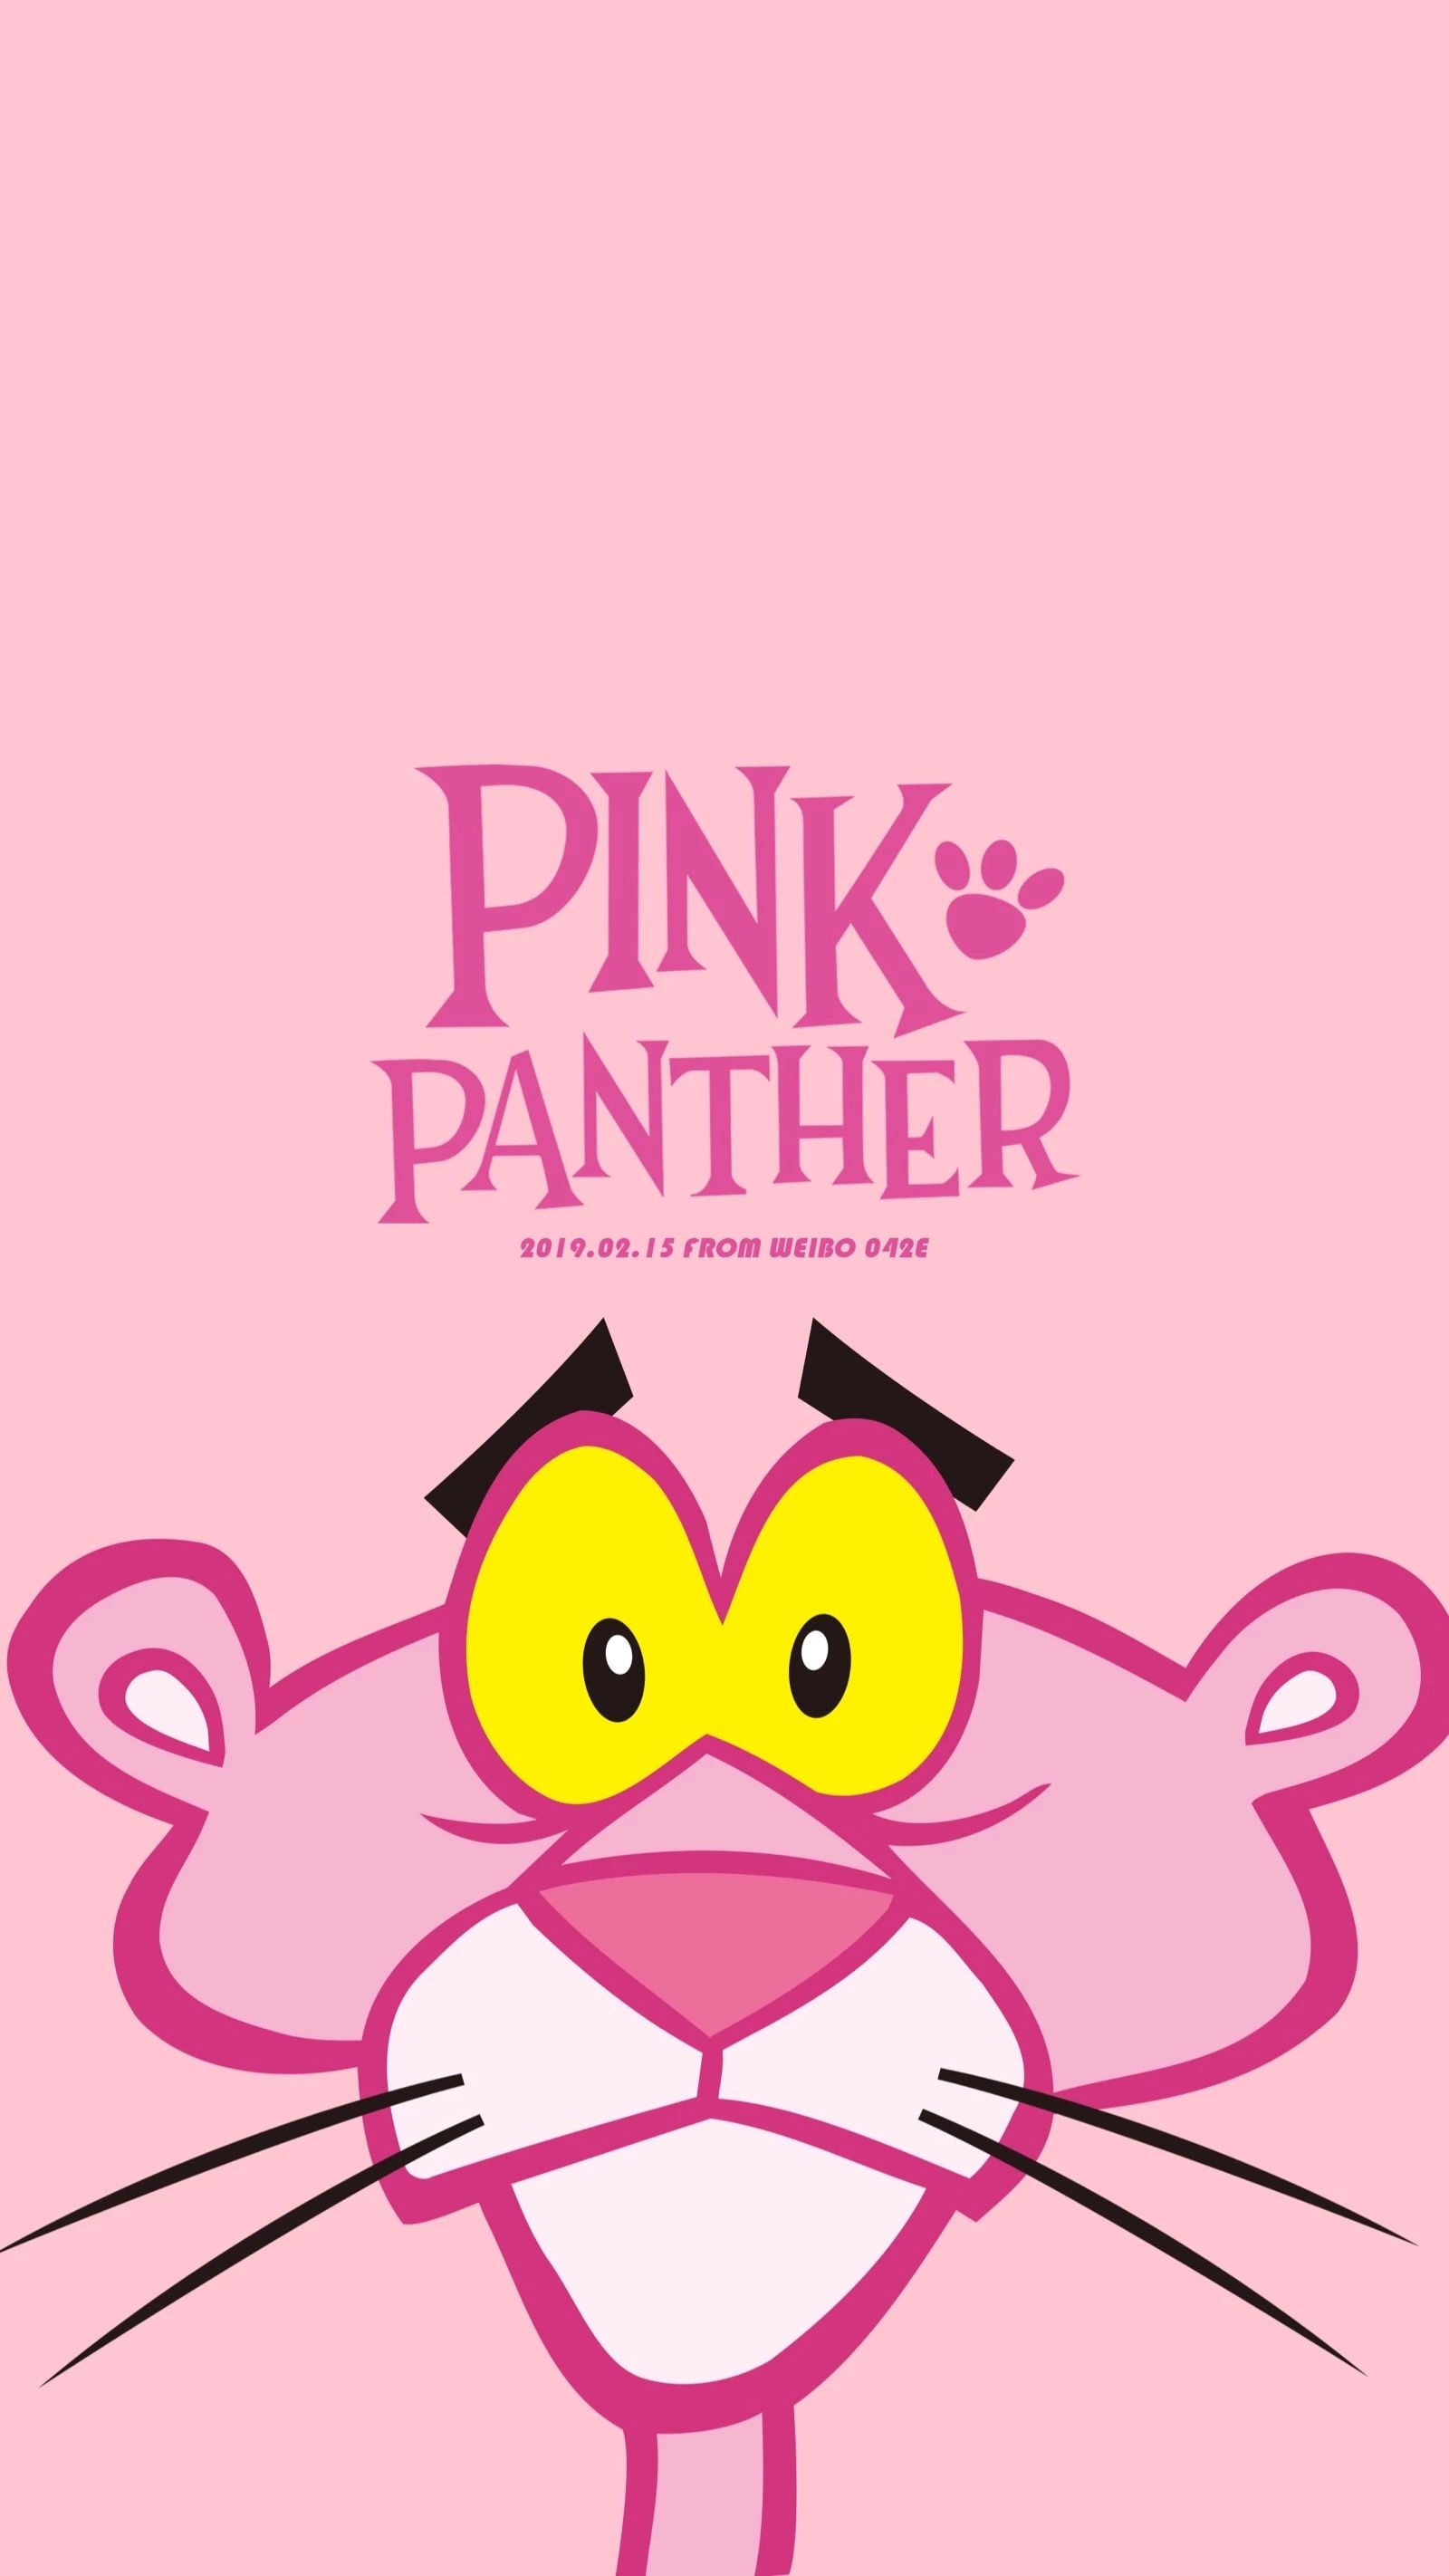 Pink Panther wallpaper. Pink panther cartoon, Pink panter, Pink panthers